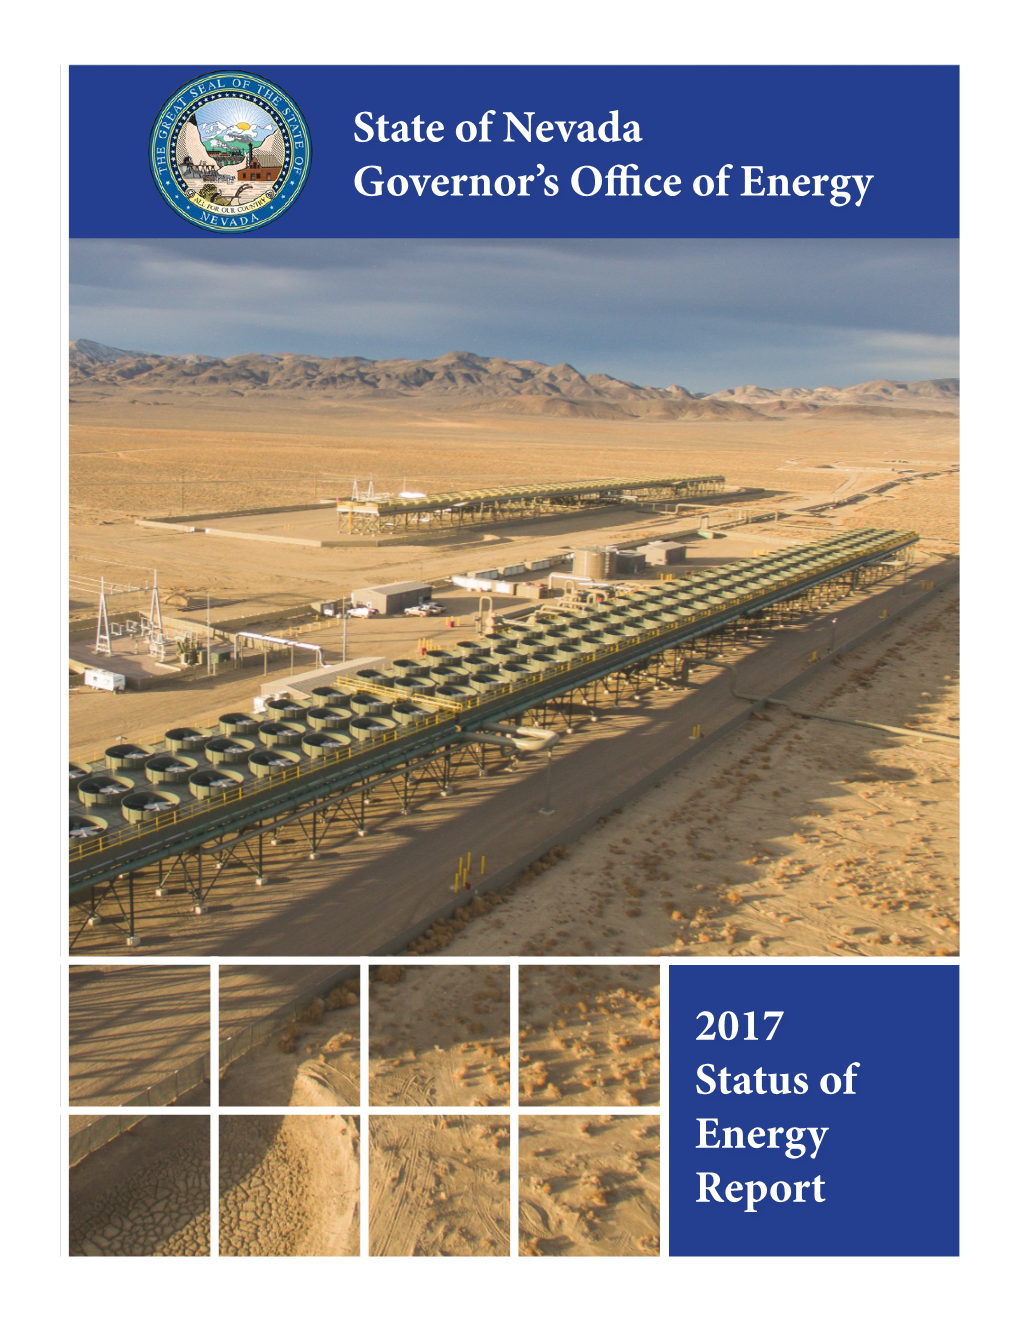 NV 2017 Status of Energy Report